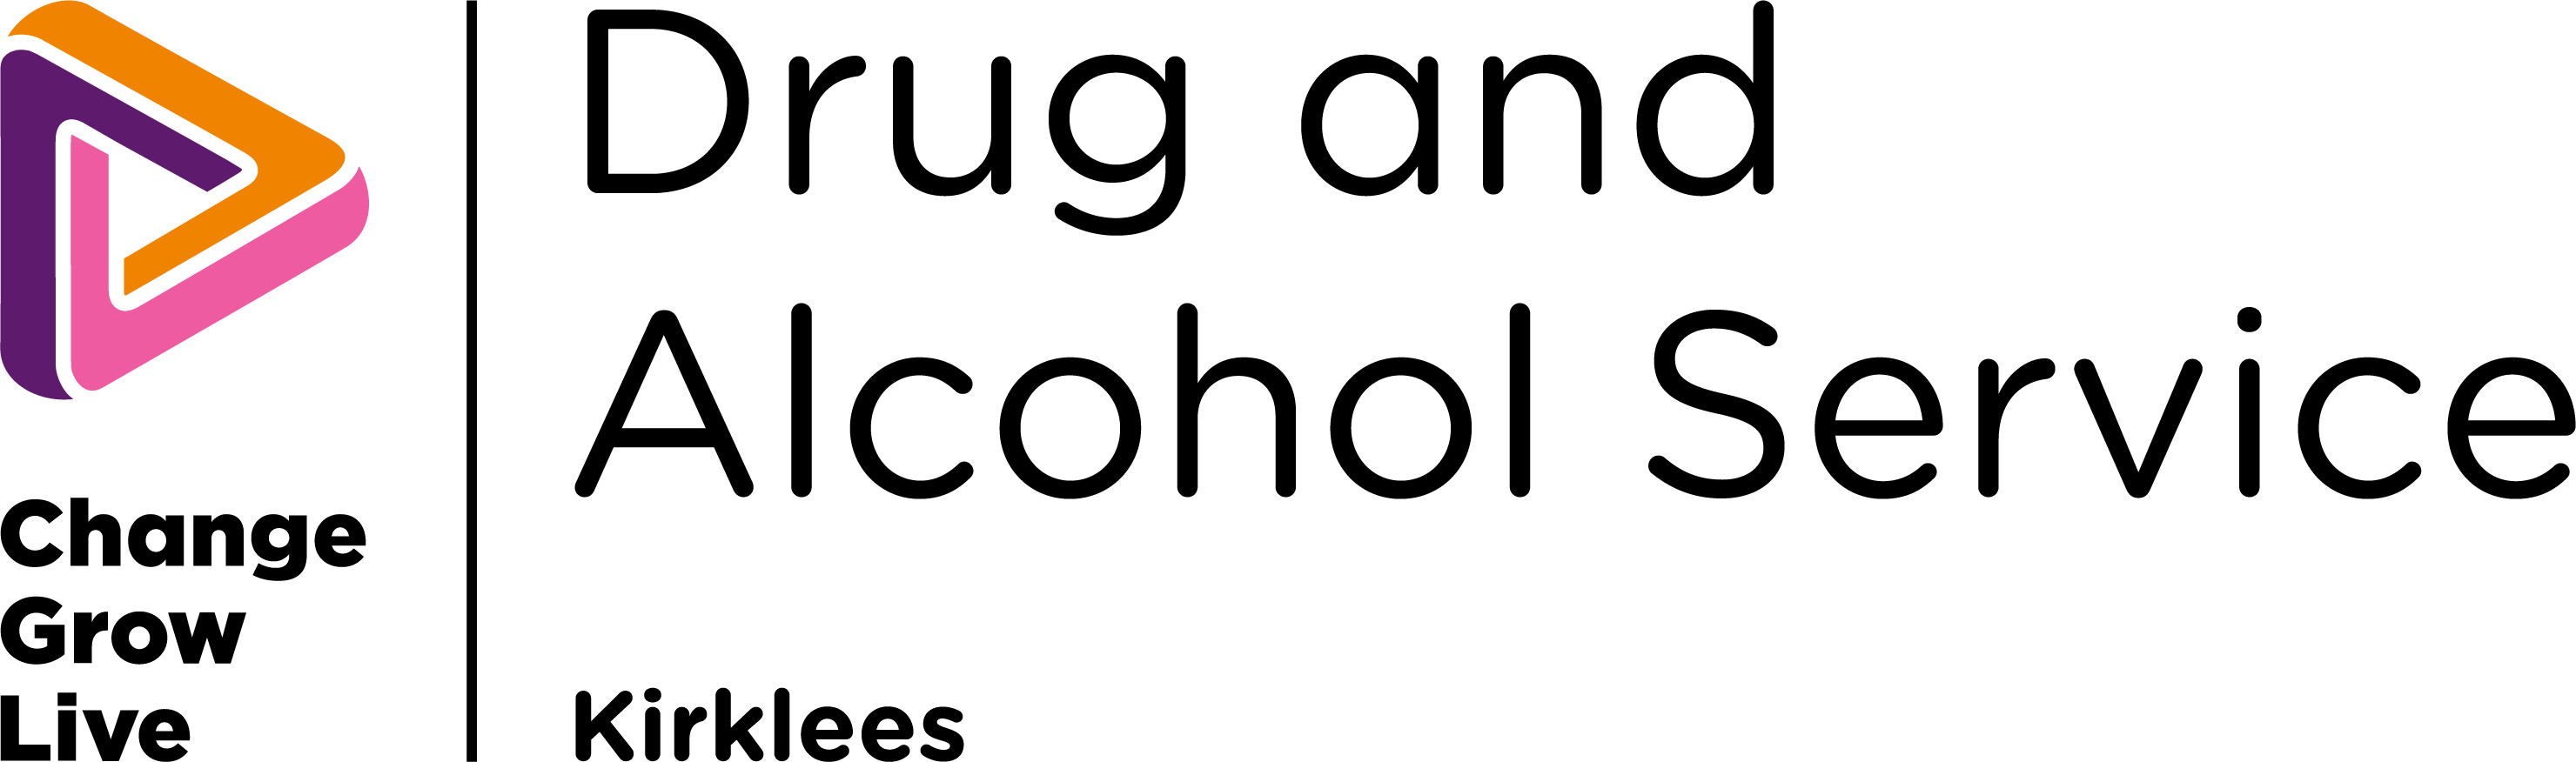 Drug and Alcohol Service - Kirklees logo